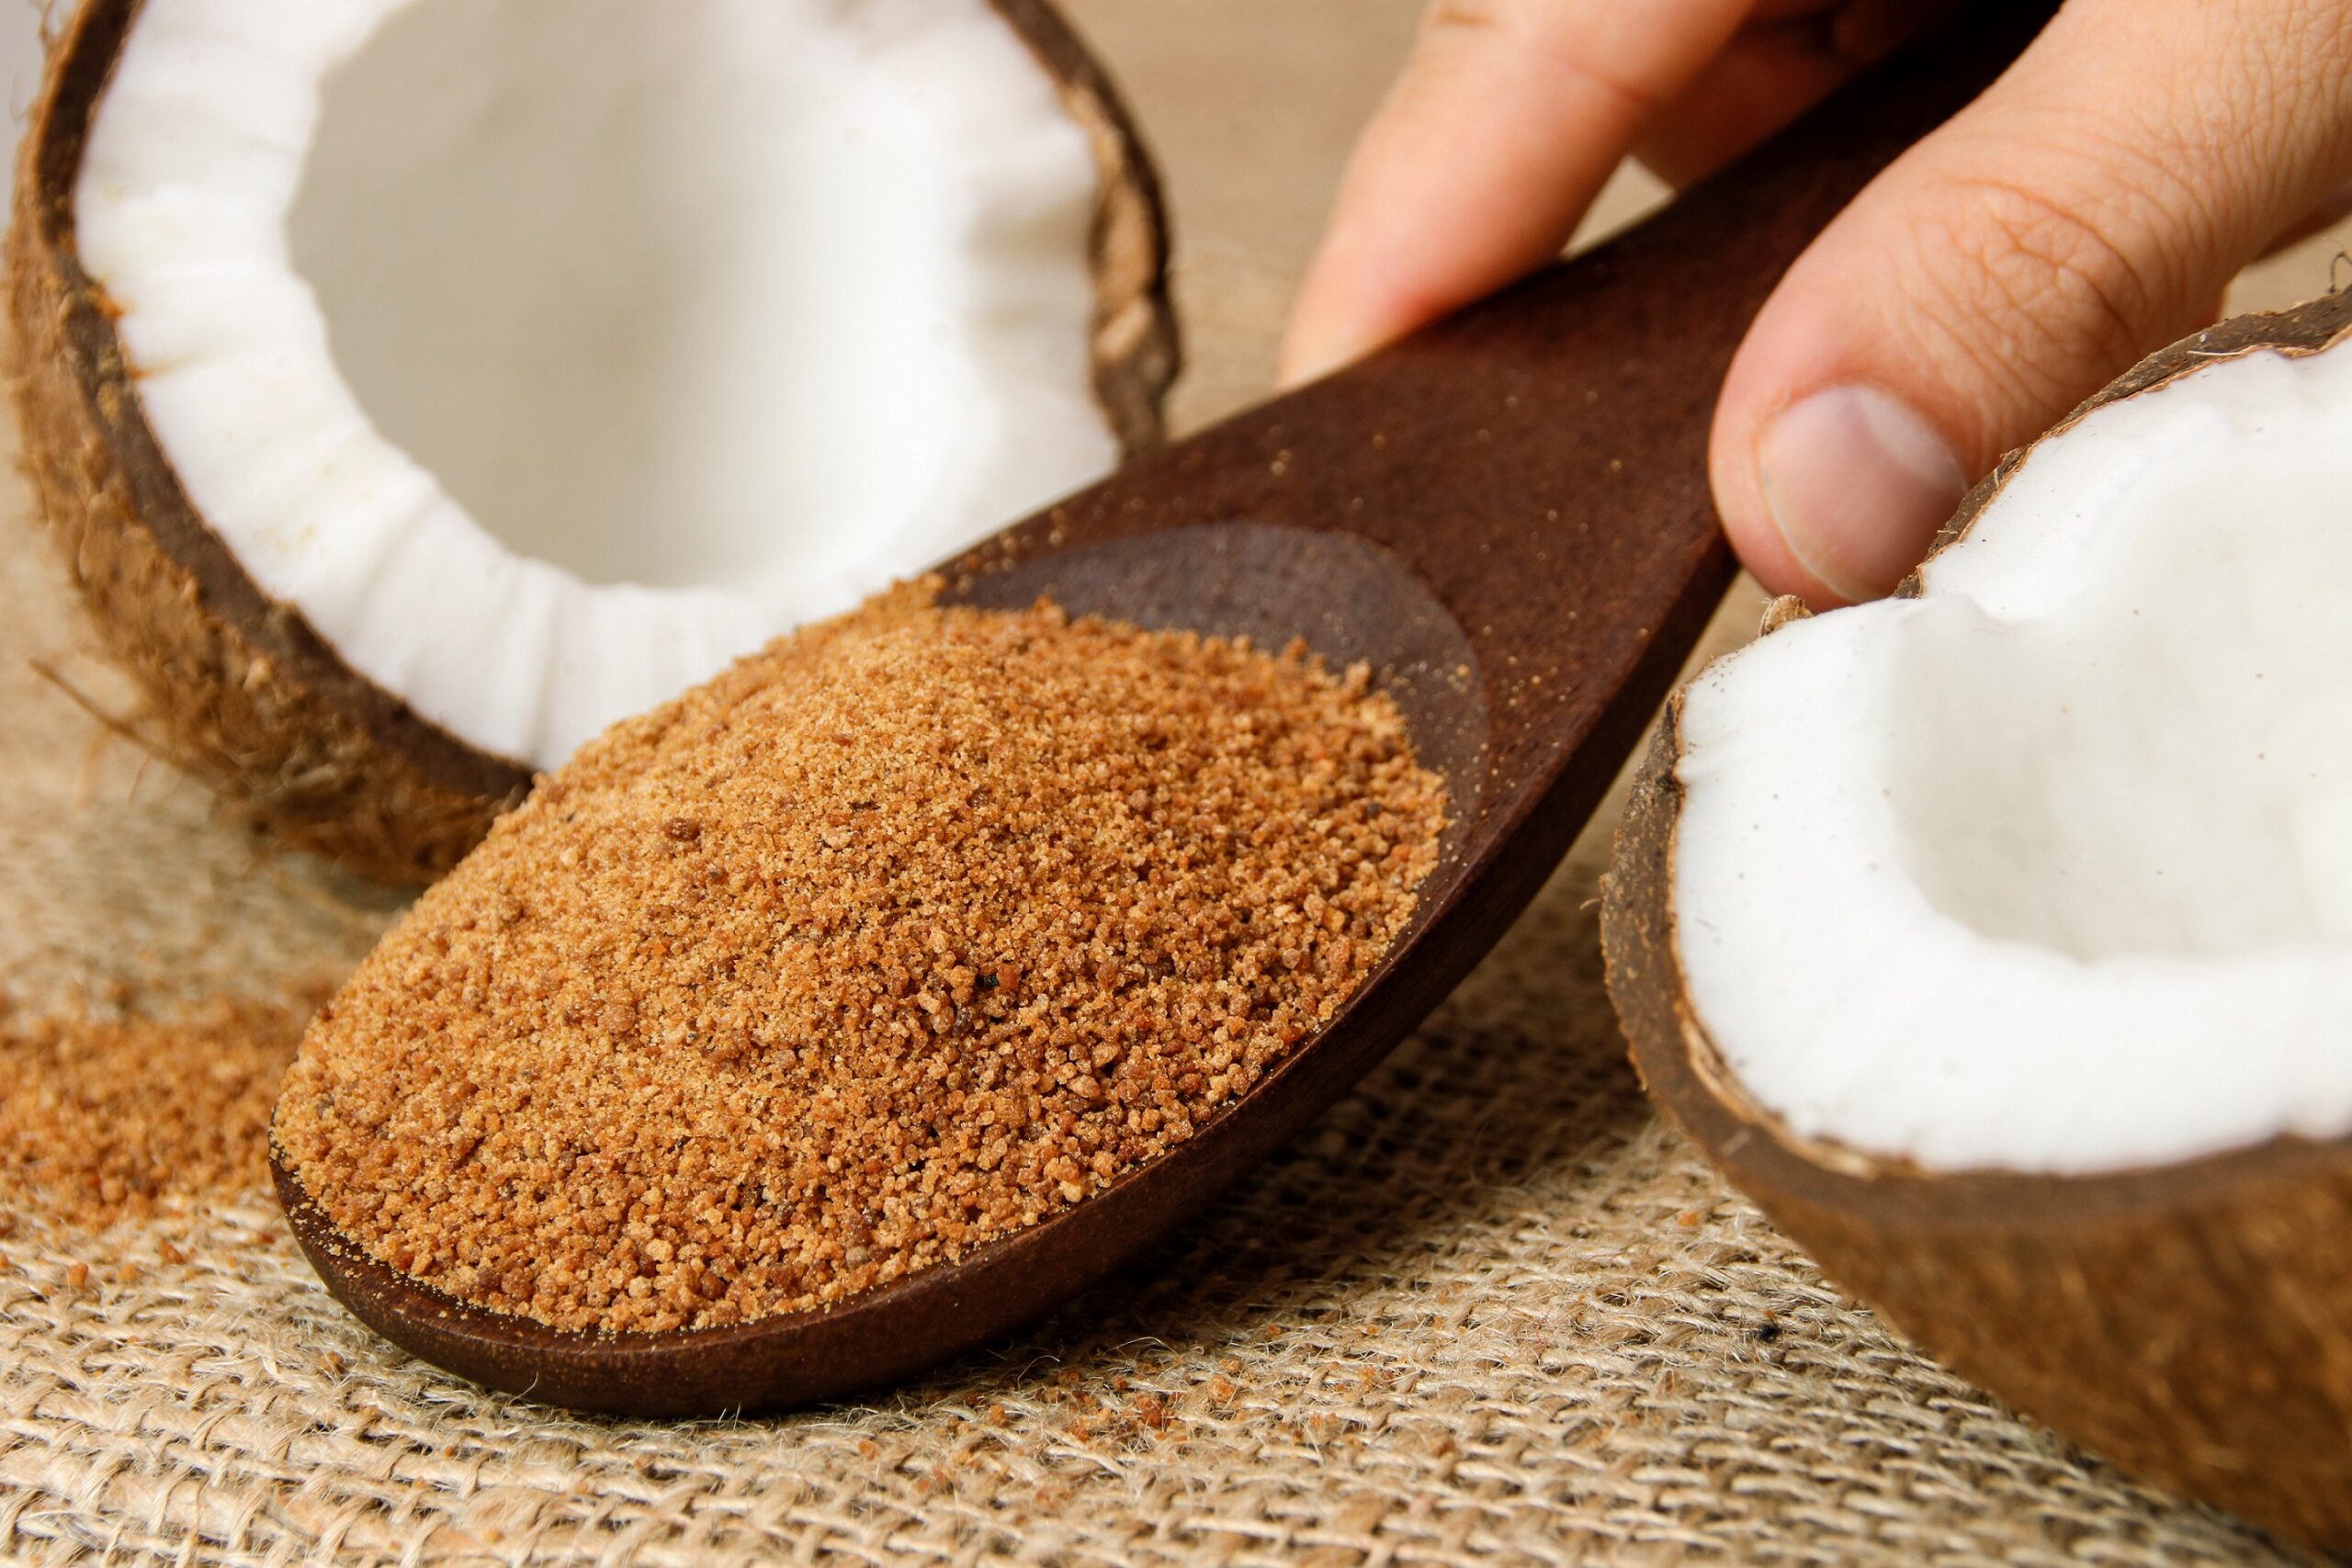 How healthy is coconut sugar really?